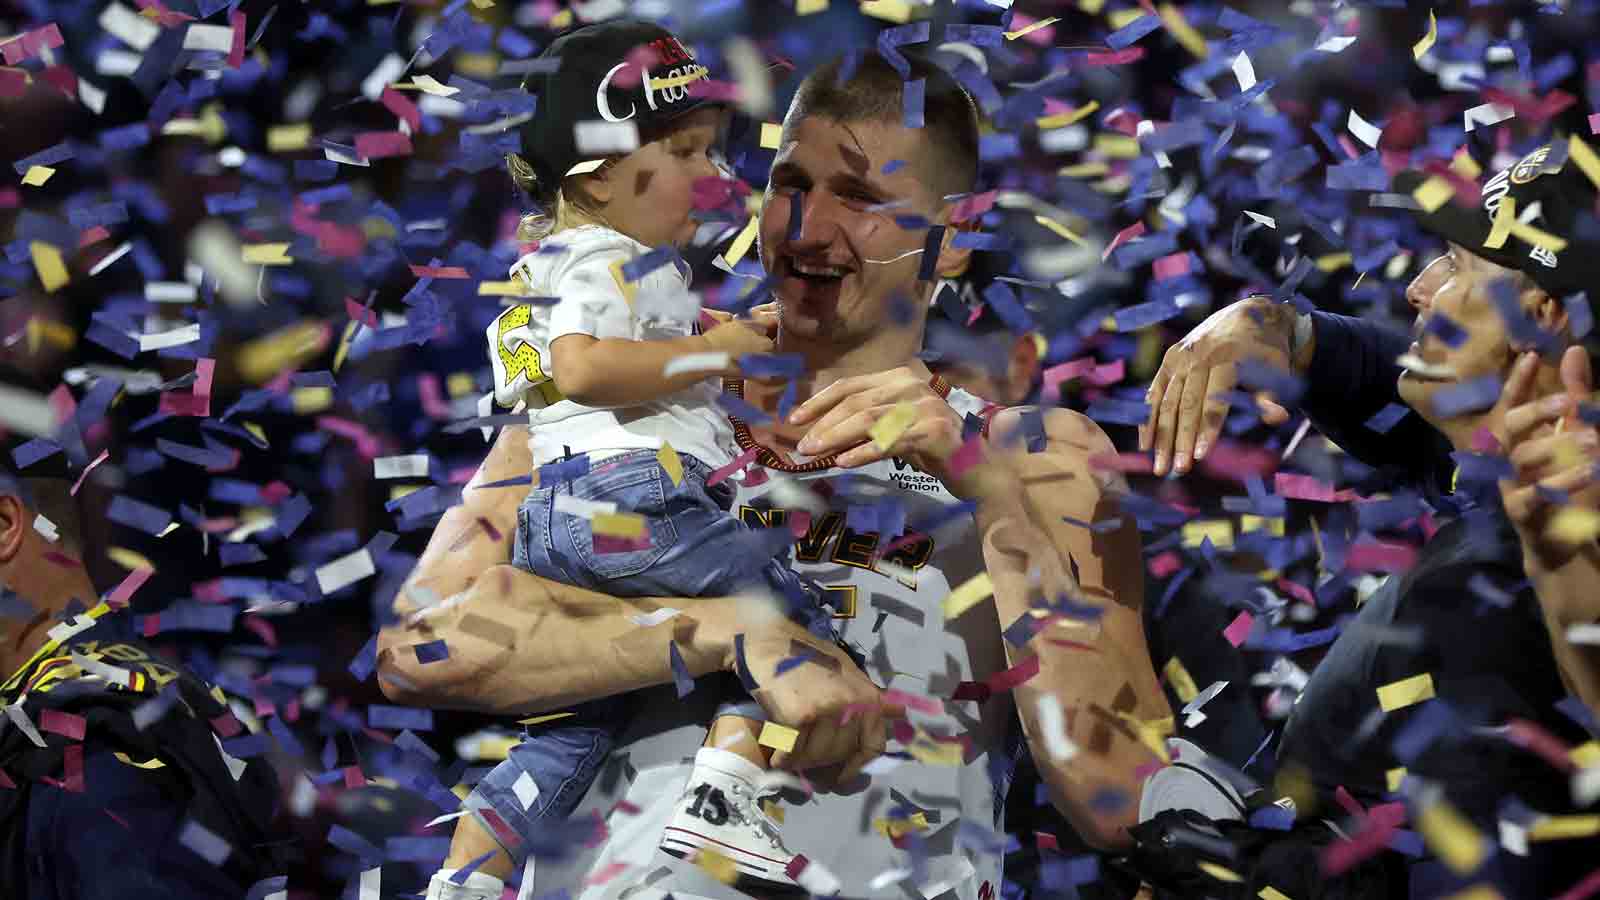 Nikola Jokic adds NBA championship, Finals MVP to impressive resume